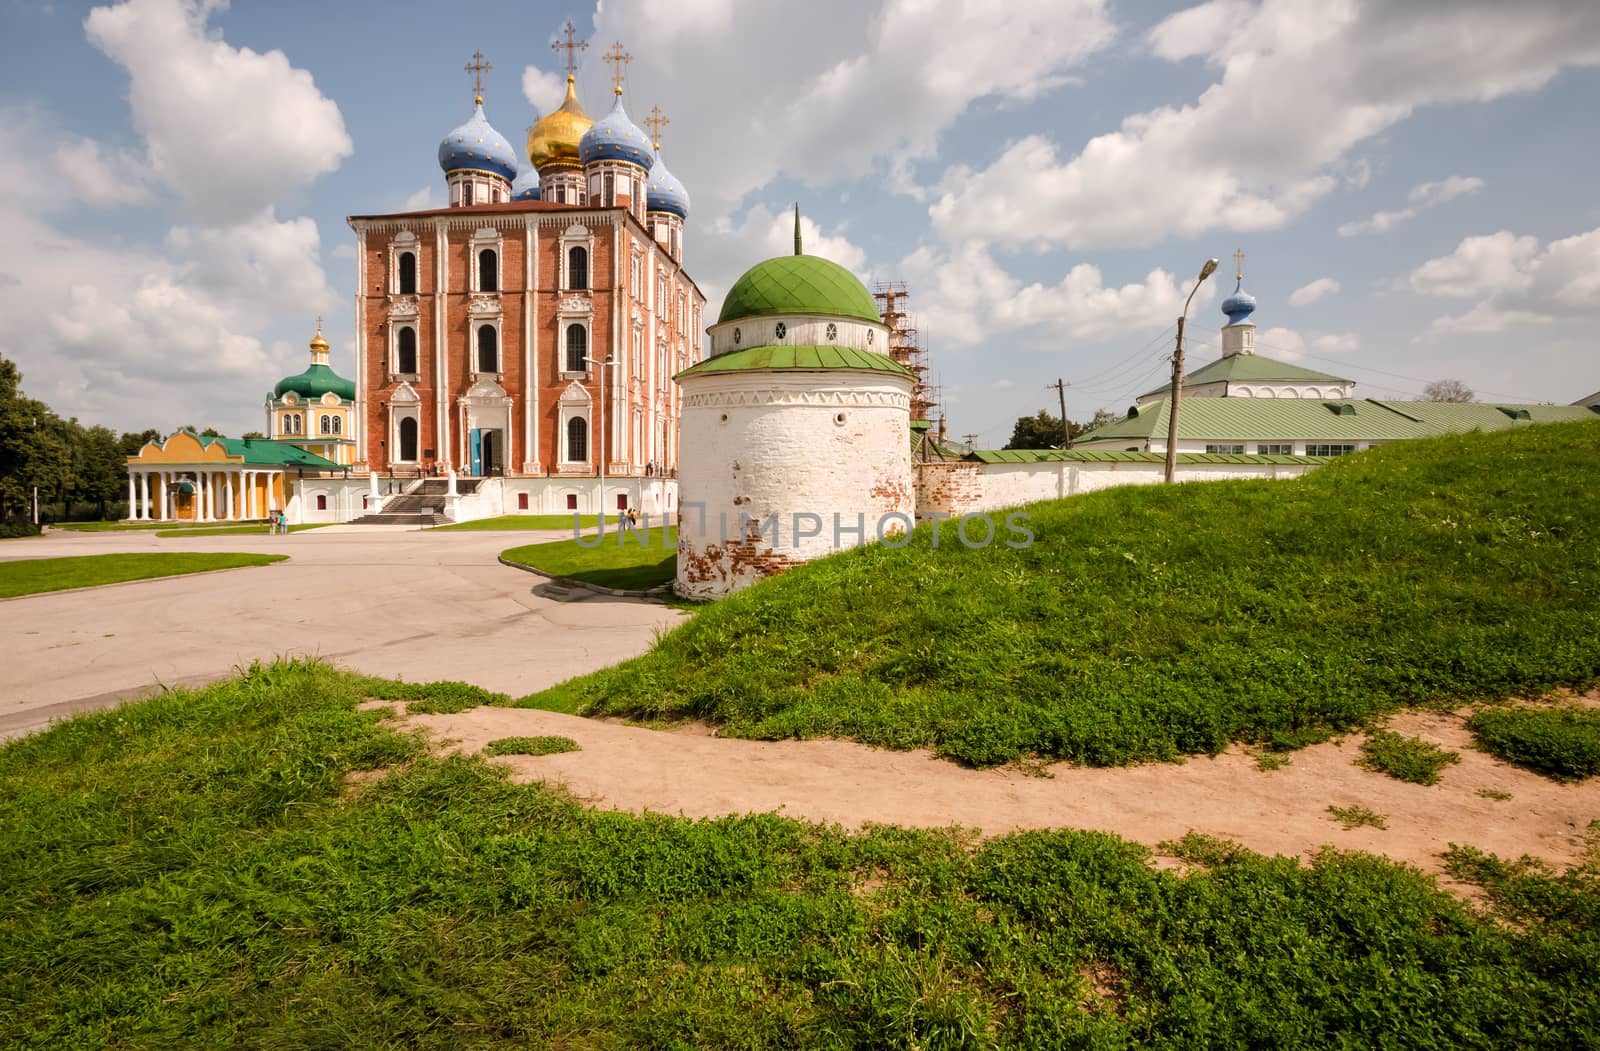 Churches in the Kremlin of Ryazan, Russia by Gaina